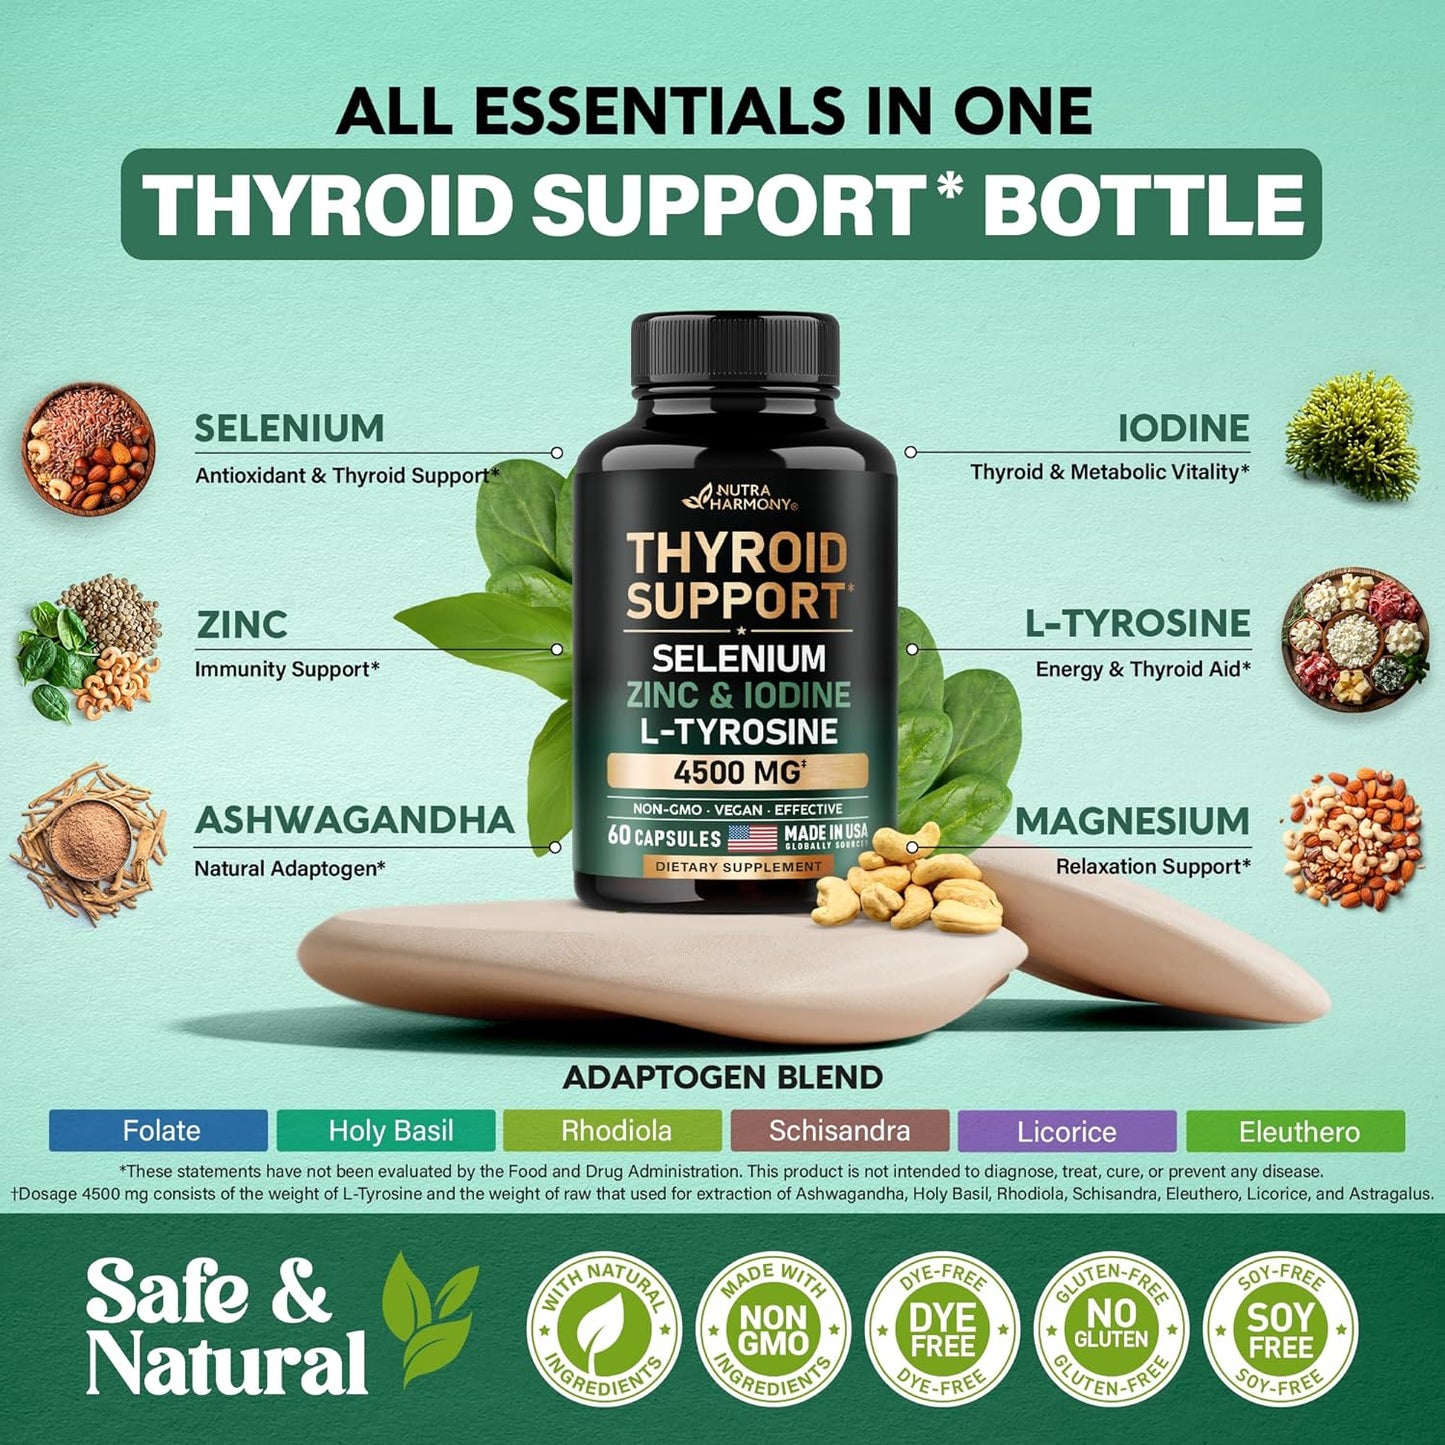 Thyroid Support with Selenium, Zinc & Iodine, L-Tyrosine, Magnesium, Adaptogen Herbs